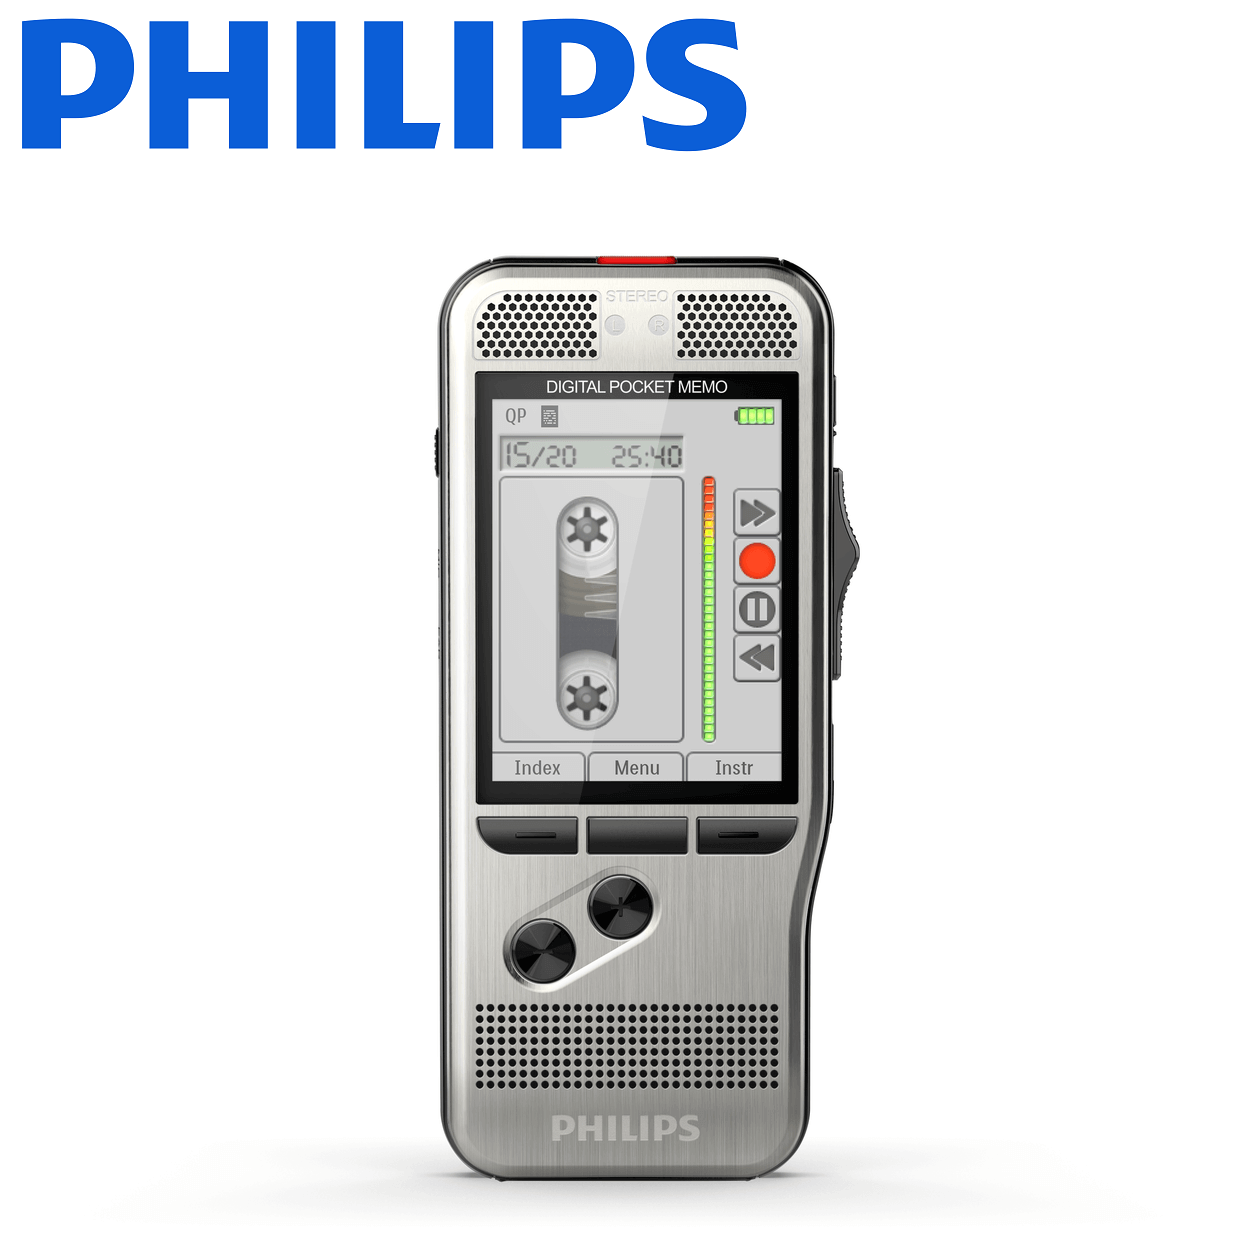 Philips Pocket Memo Voice Recorder DPM-7800 | Pacific ...